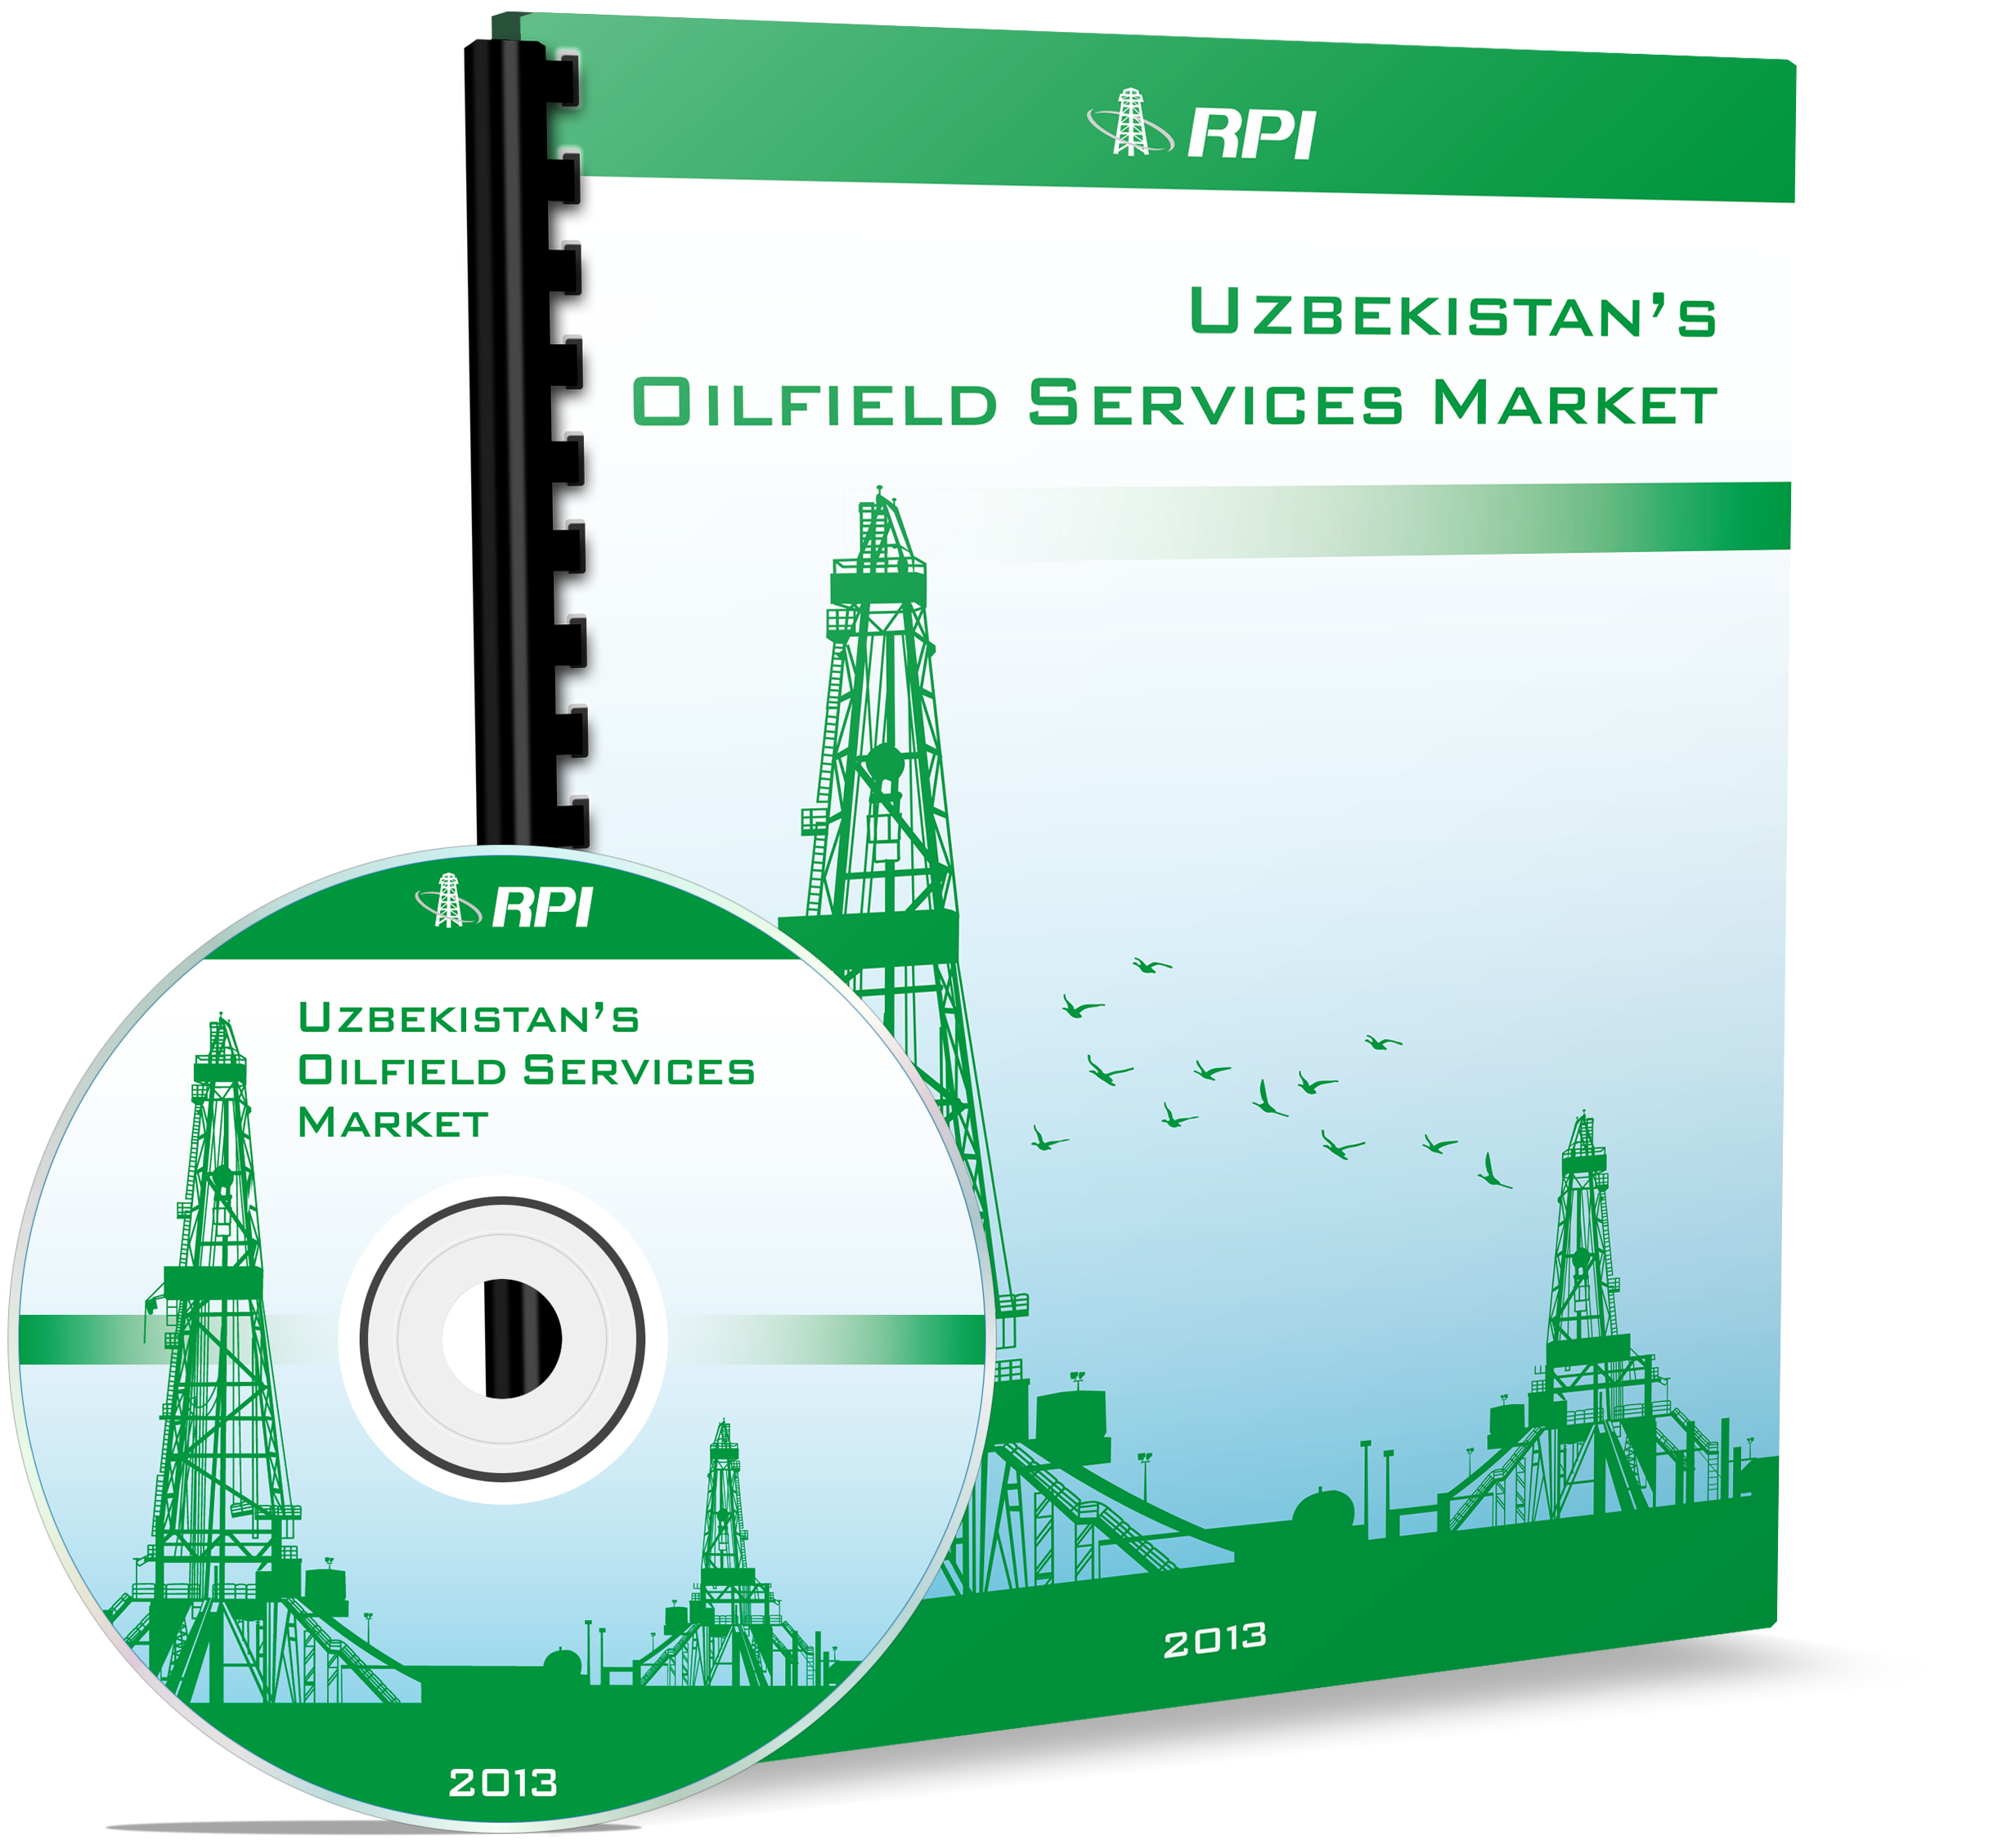 Uzbekistan's Oilfield Services Market 2013